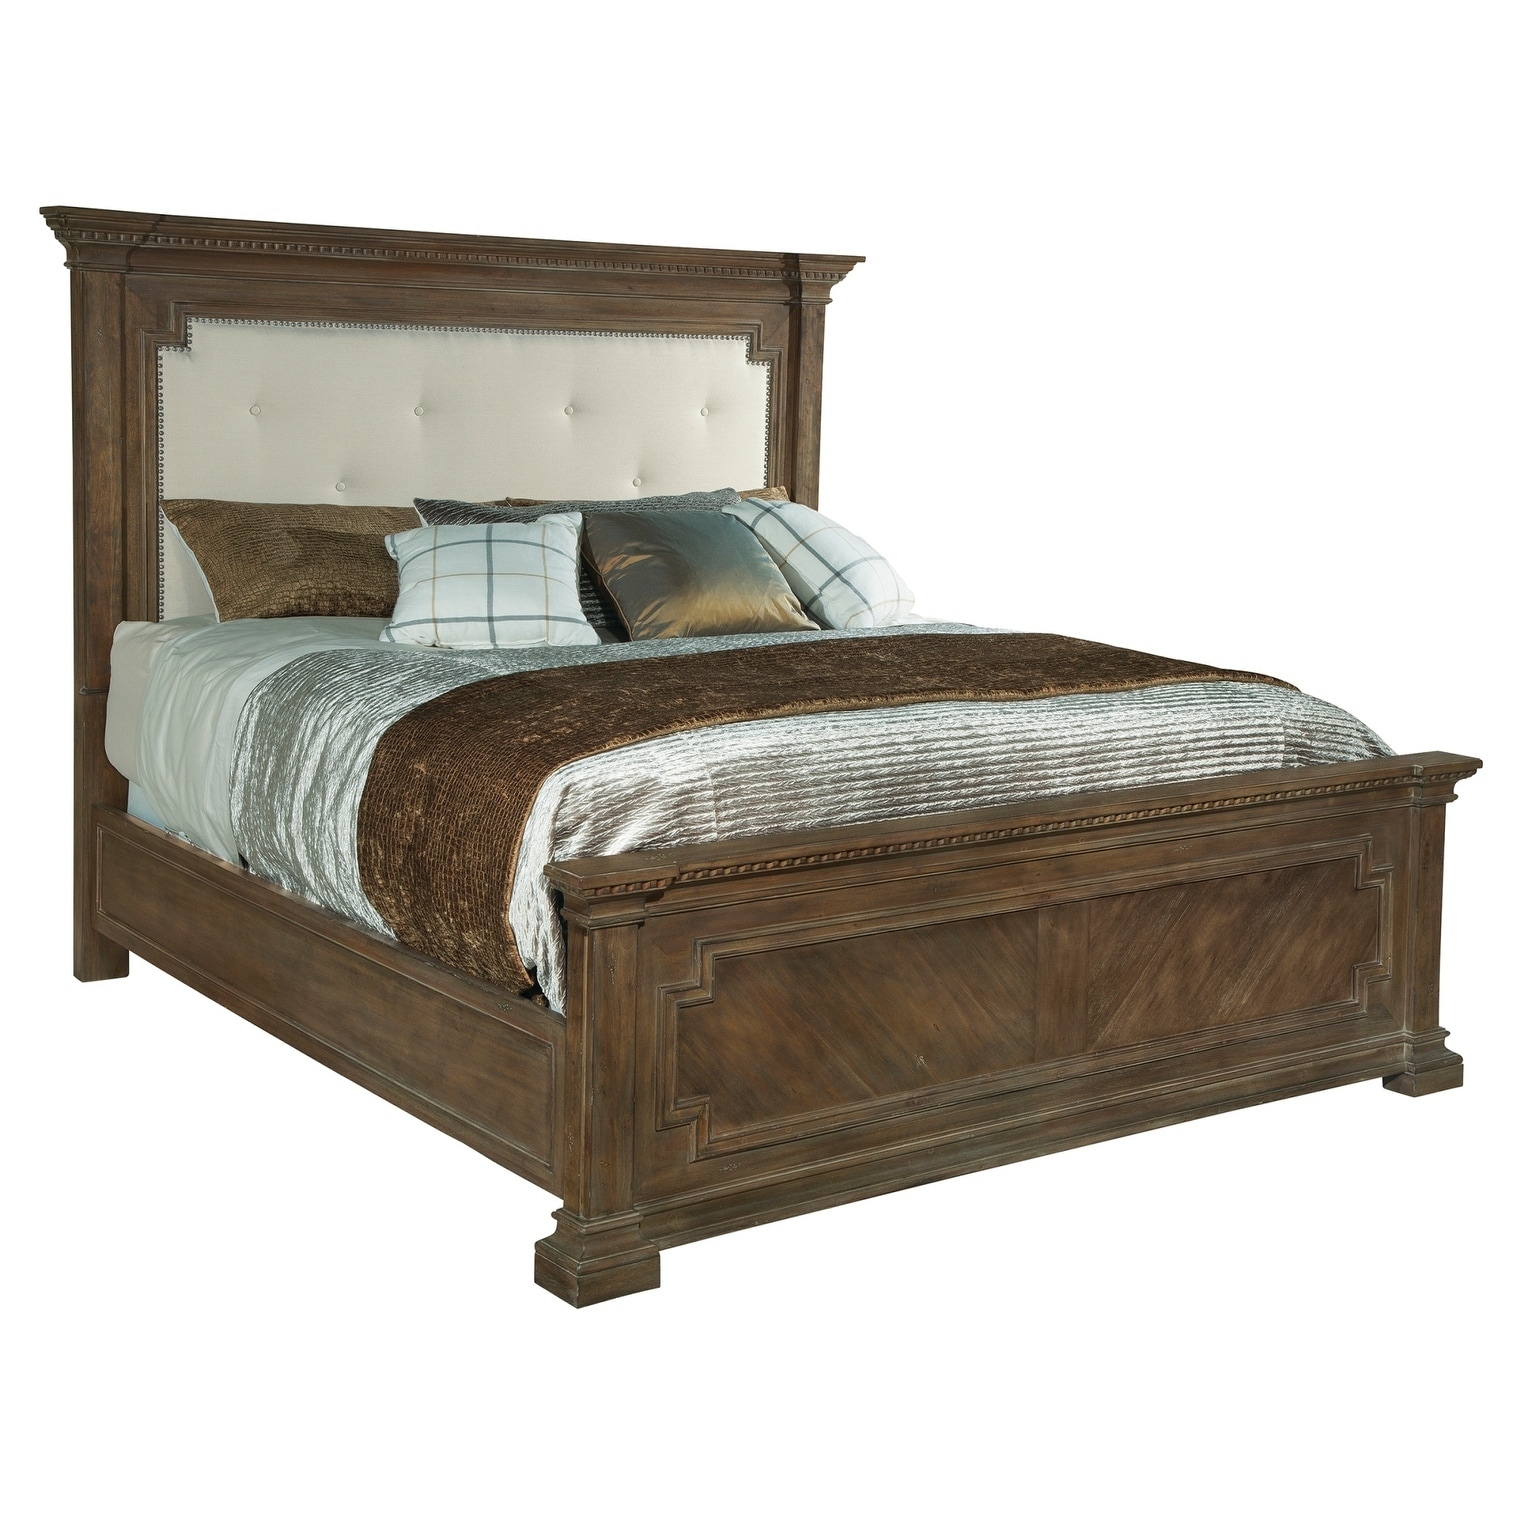 Hekman Furniture Turtle Creek Elegant Rustic Distressed King Upholstered Bed Frame With Headboard Footboard Overstock 24230388